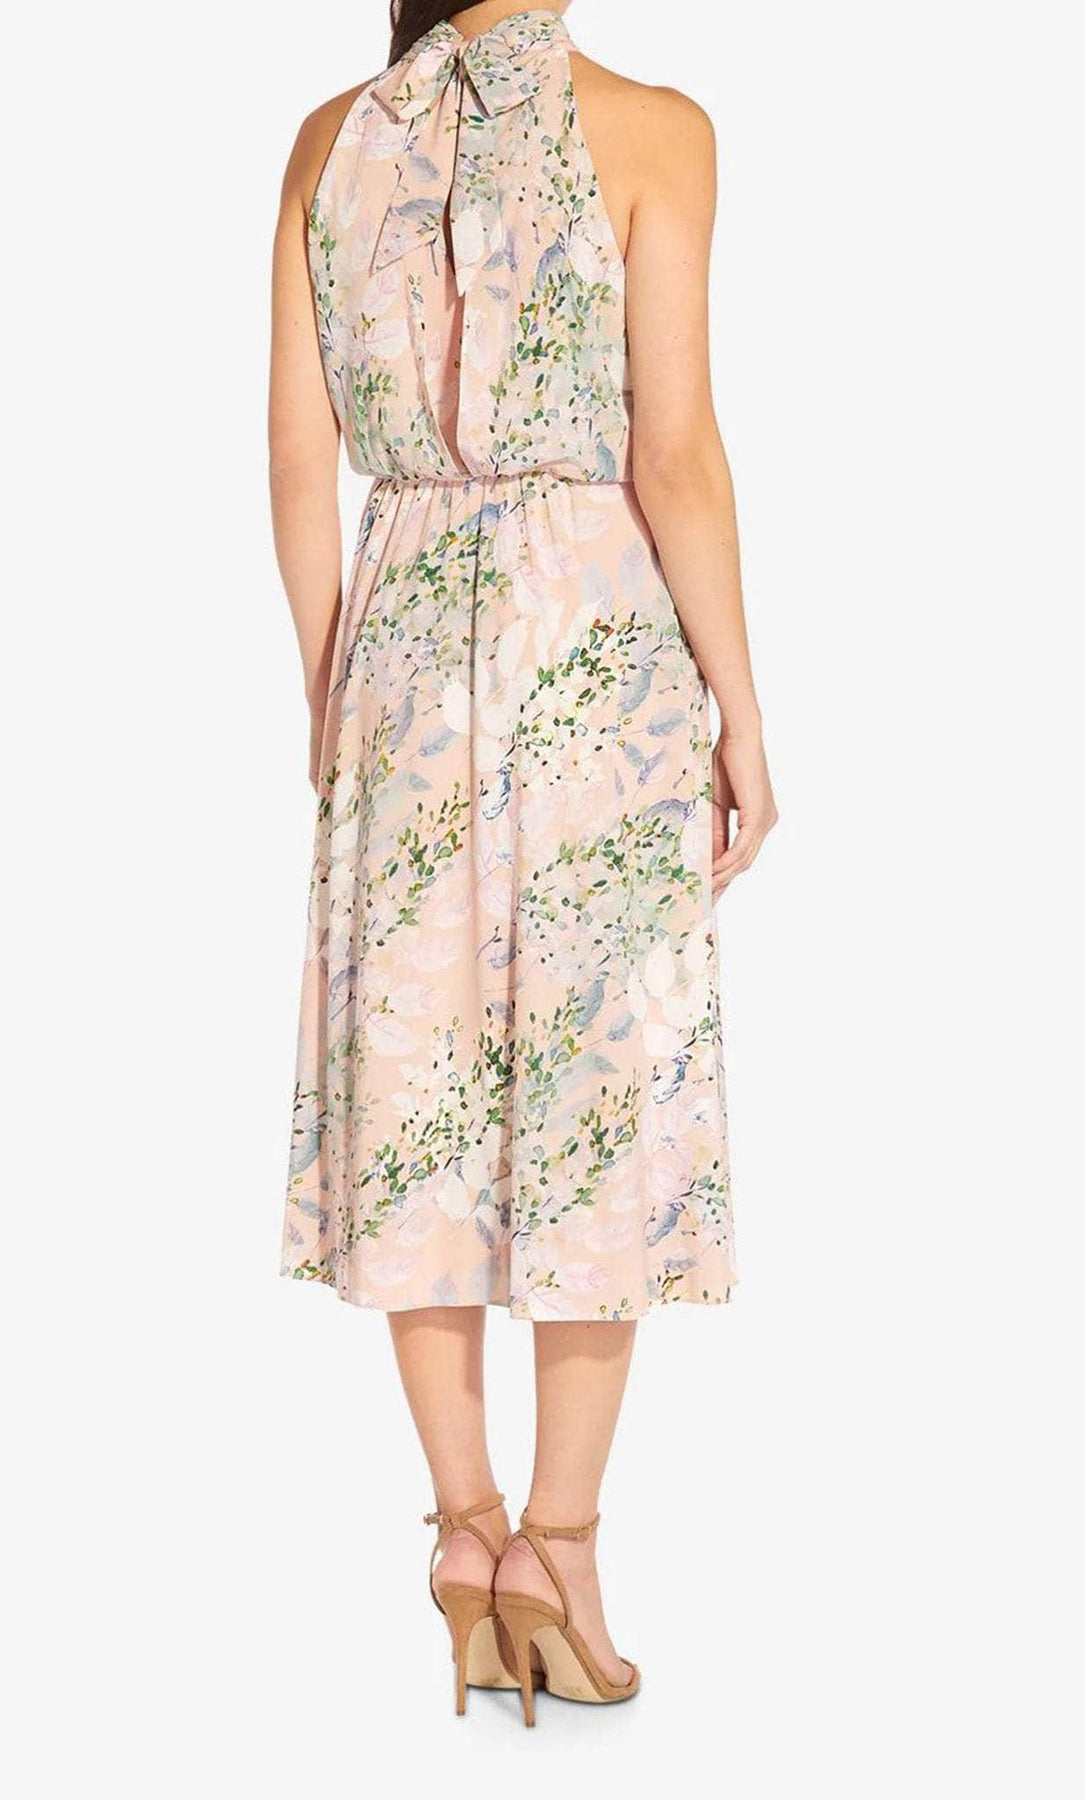 Adrianna Papell AP1D104505 - Floral A-line Tea-Length Dress Holiday Dresses